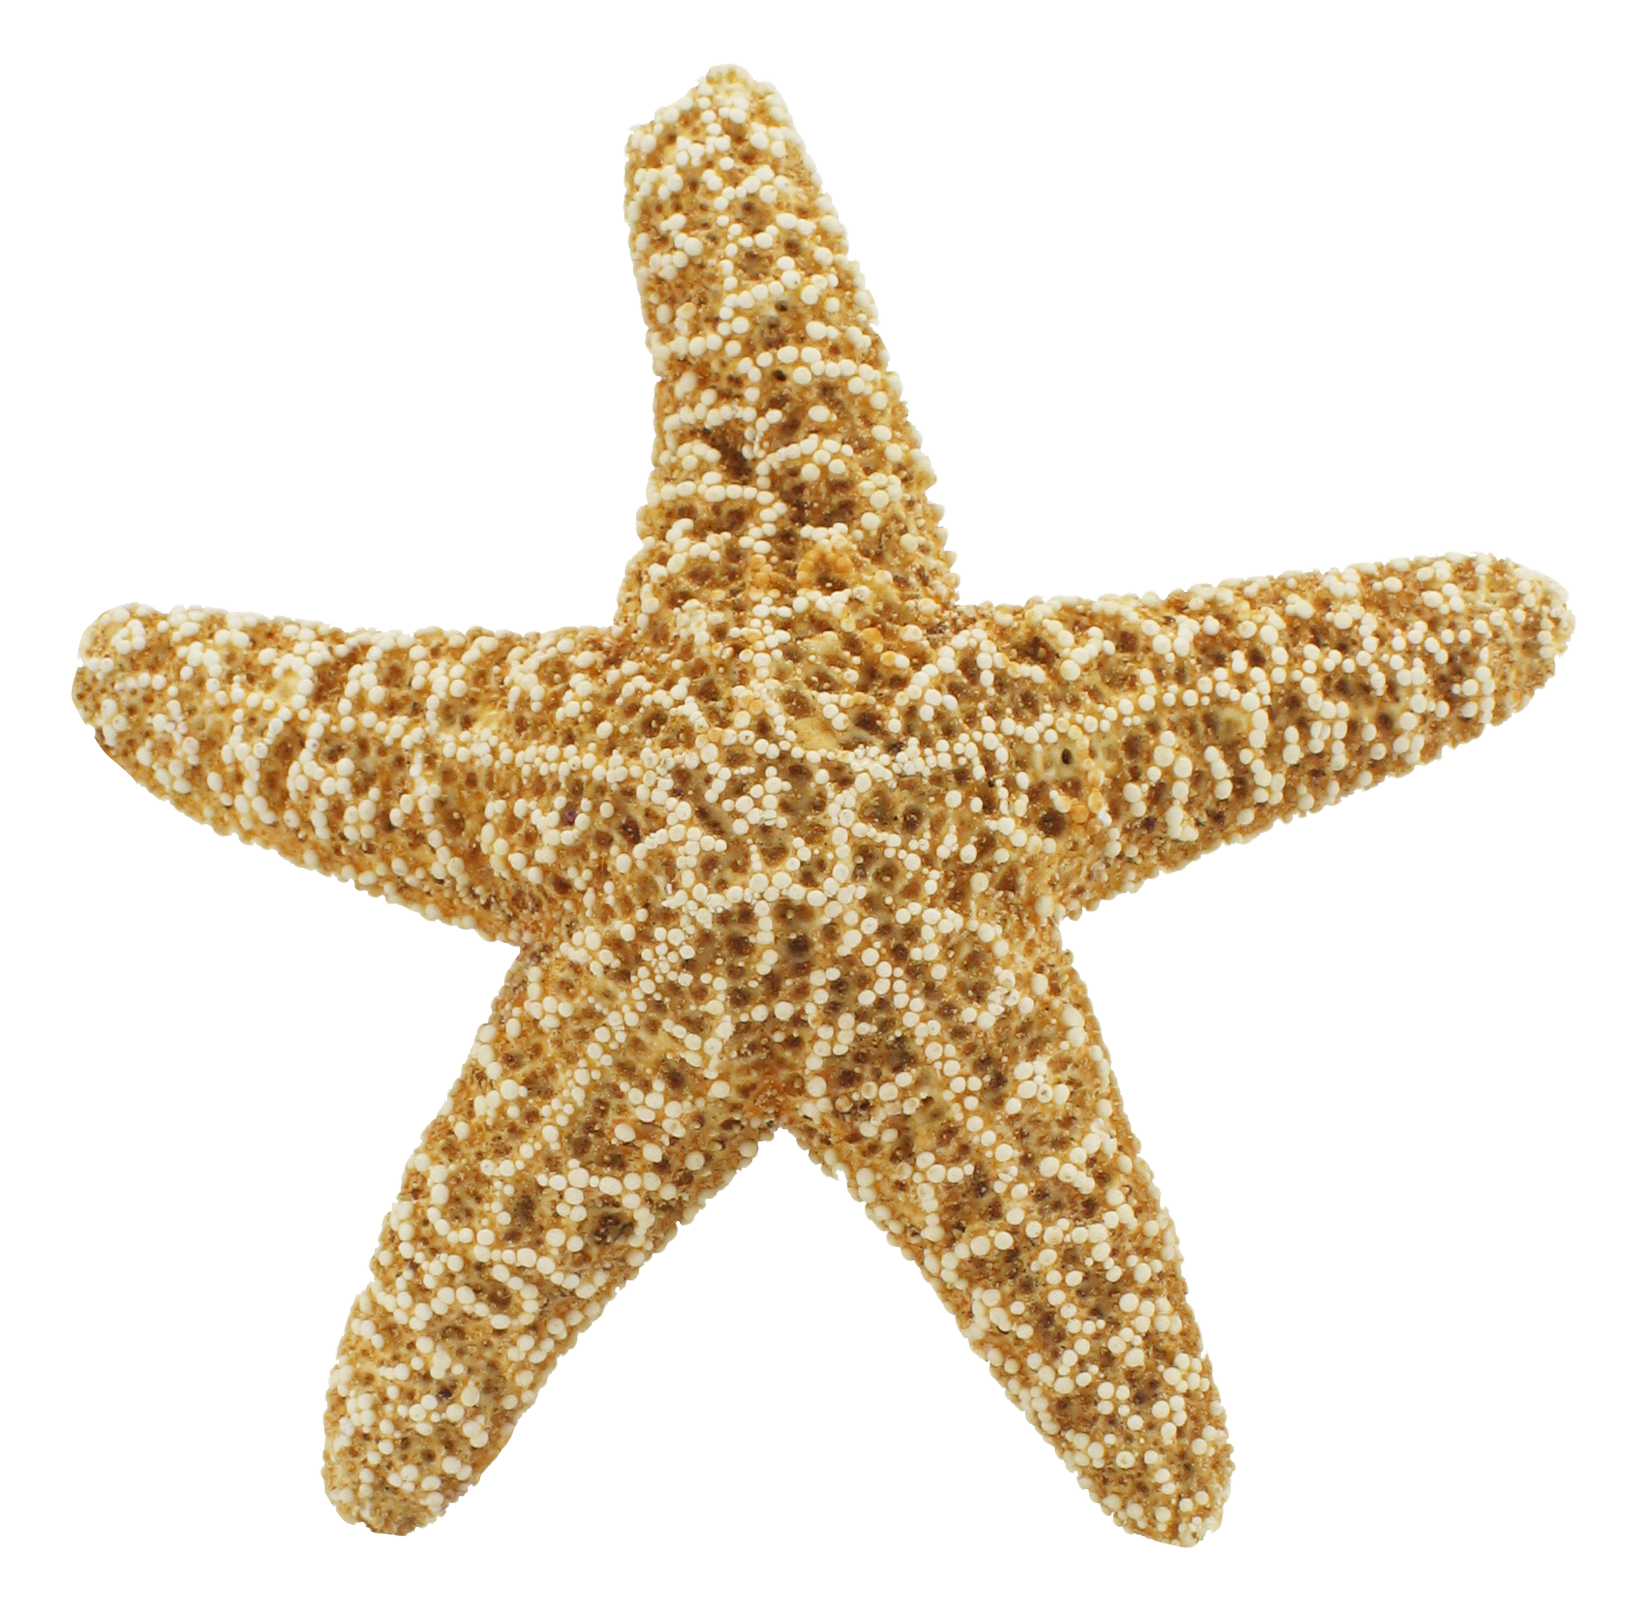 Starfish PNG HQ Image - Starfish Png